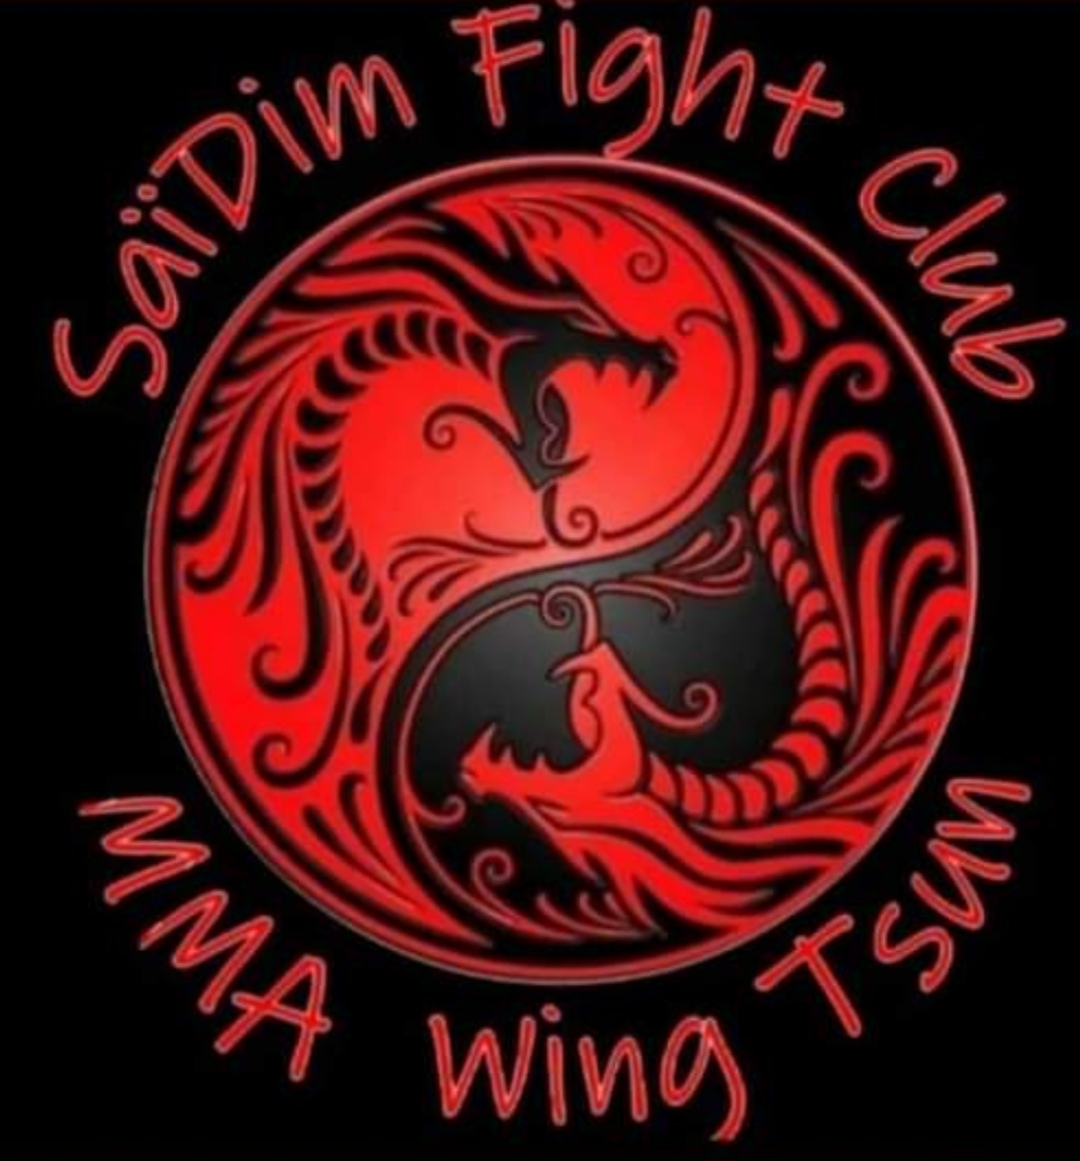 Saidim fight club